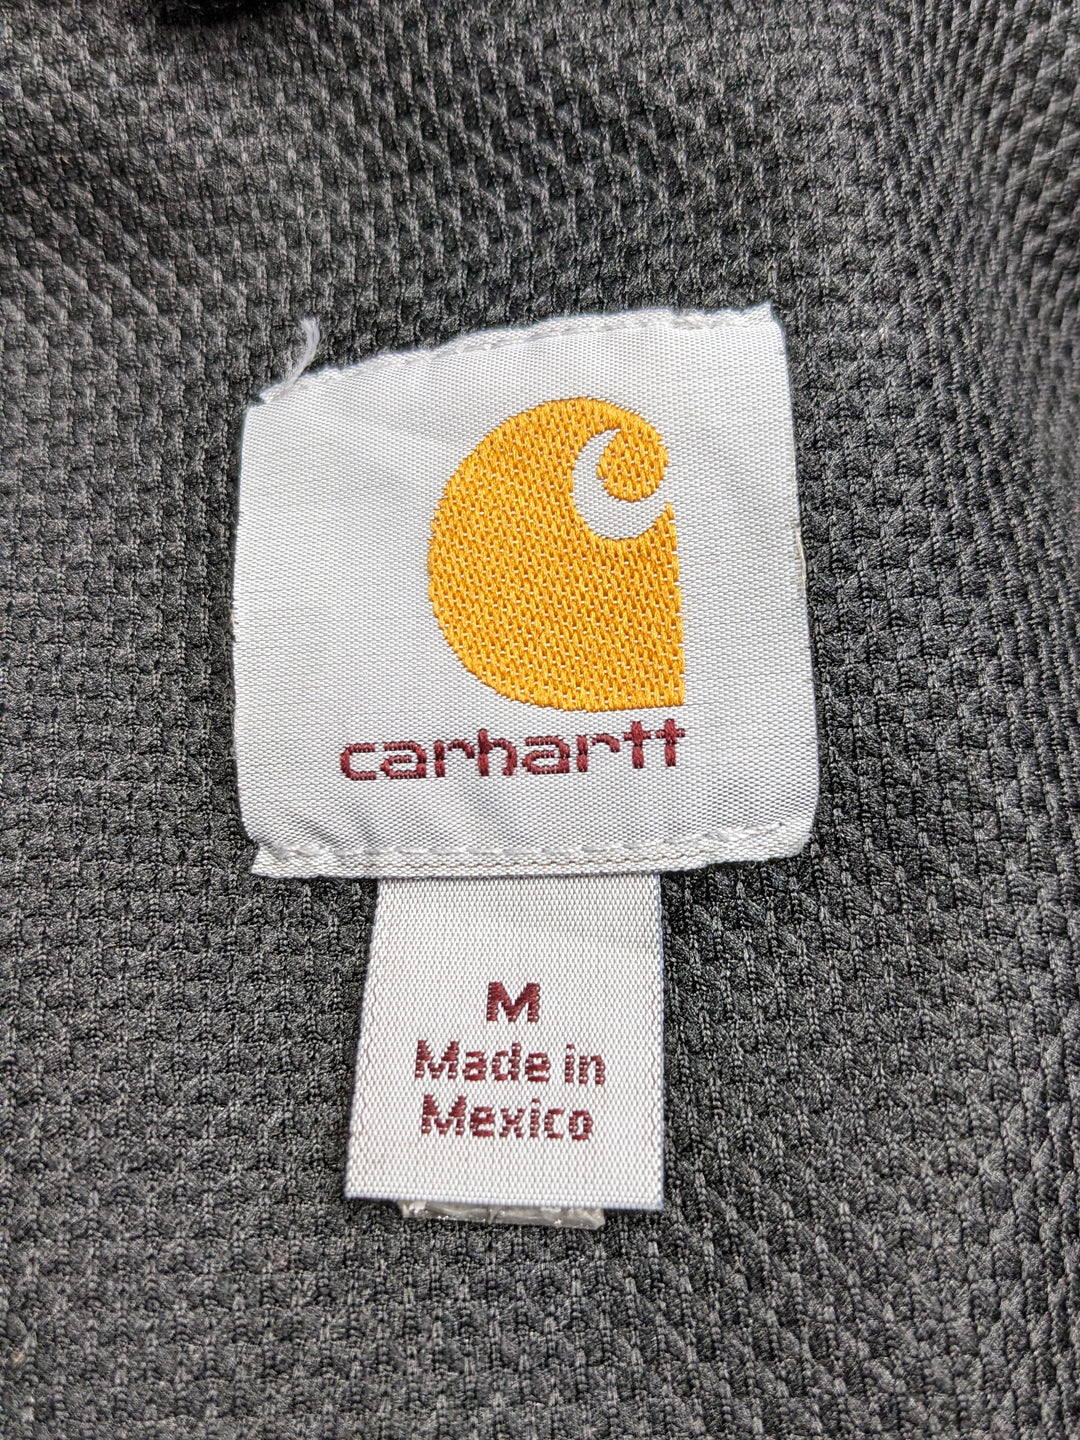 Carhartt Jacket 1 pc 4 lbs C0419207-05